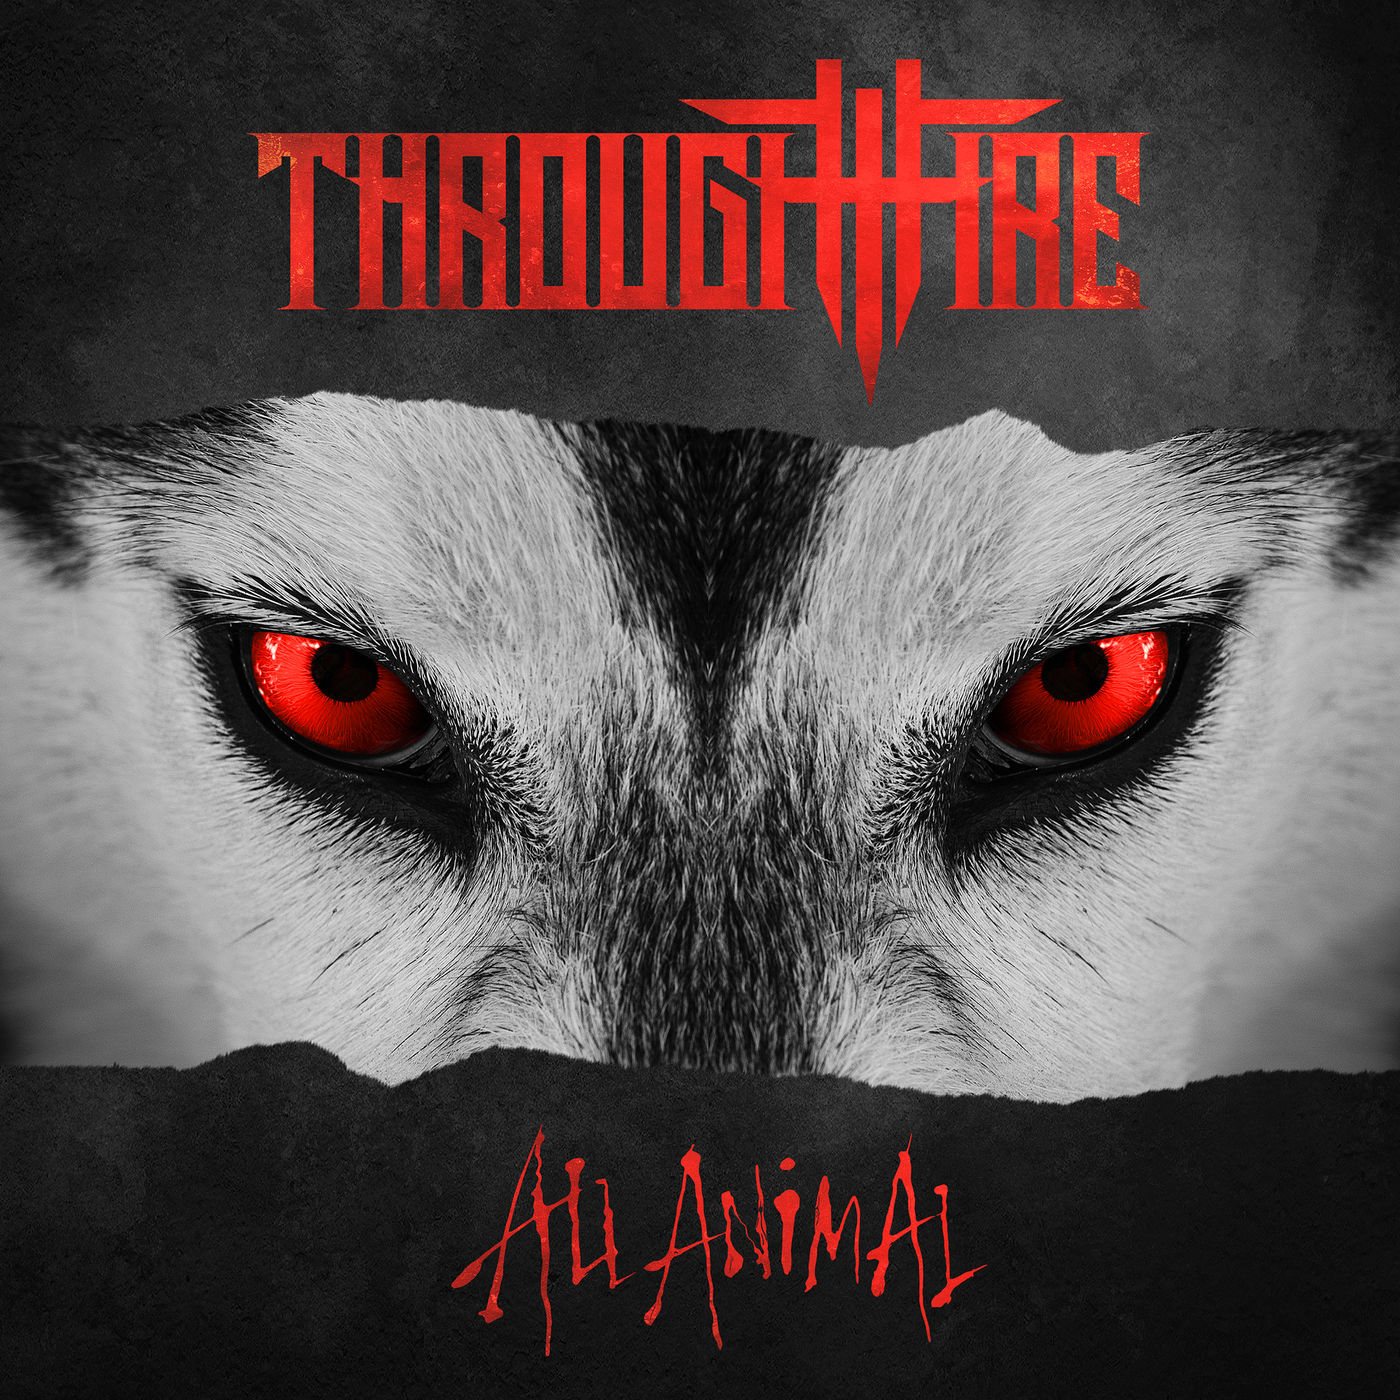 Through Fire - All Animal (2019)